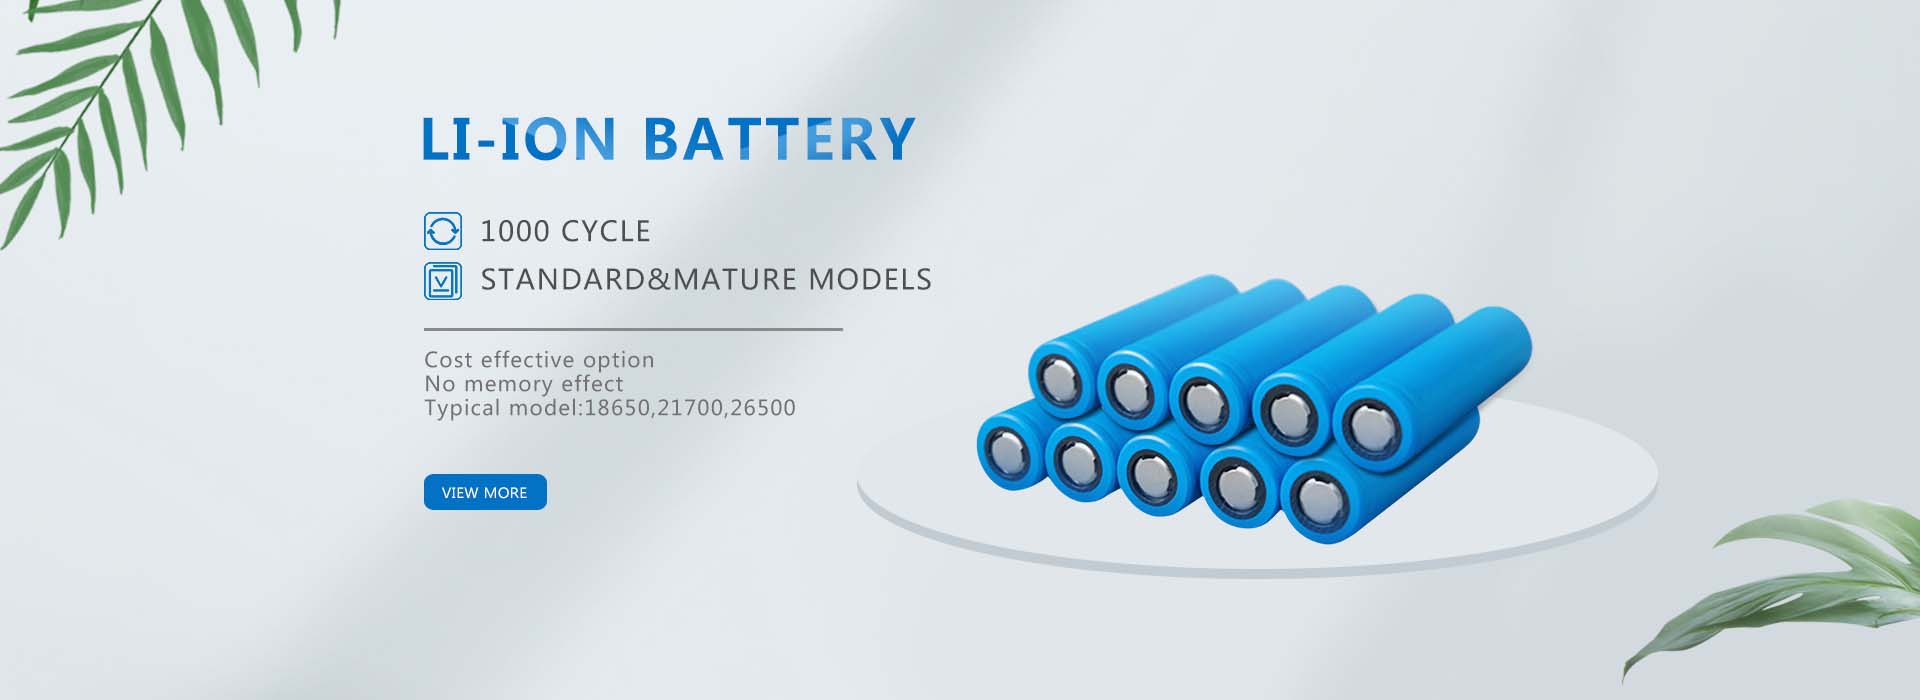 Li-ion Battery Manufacturers